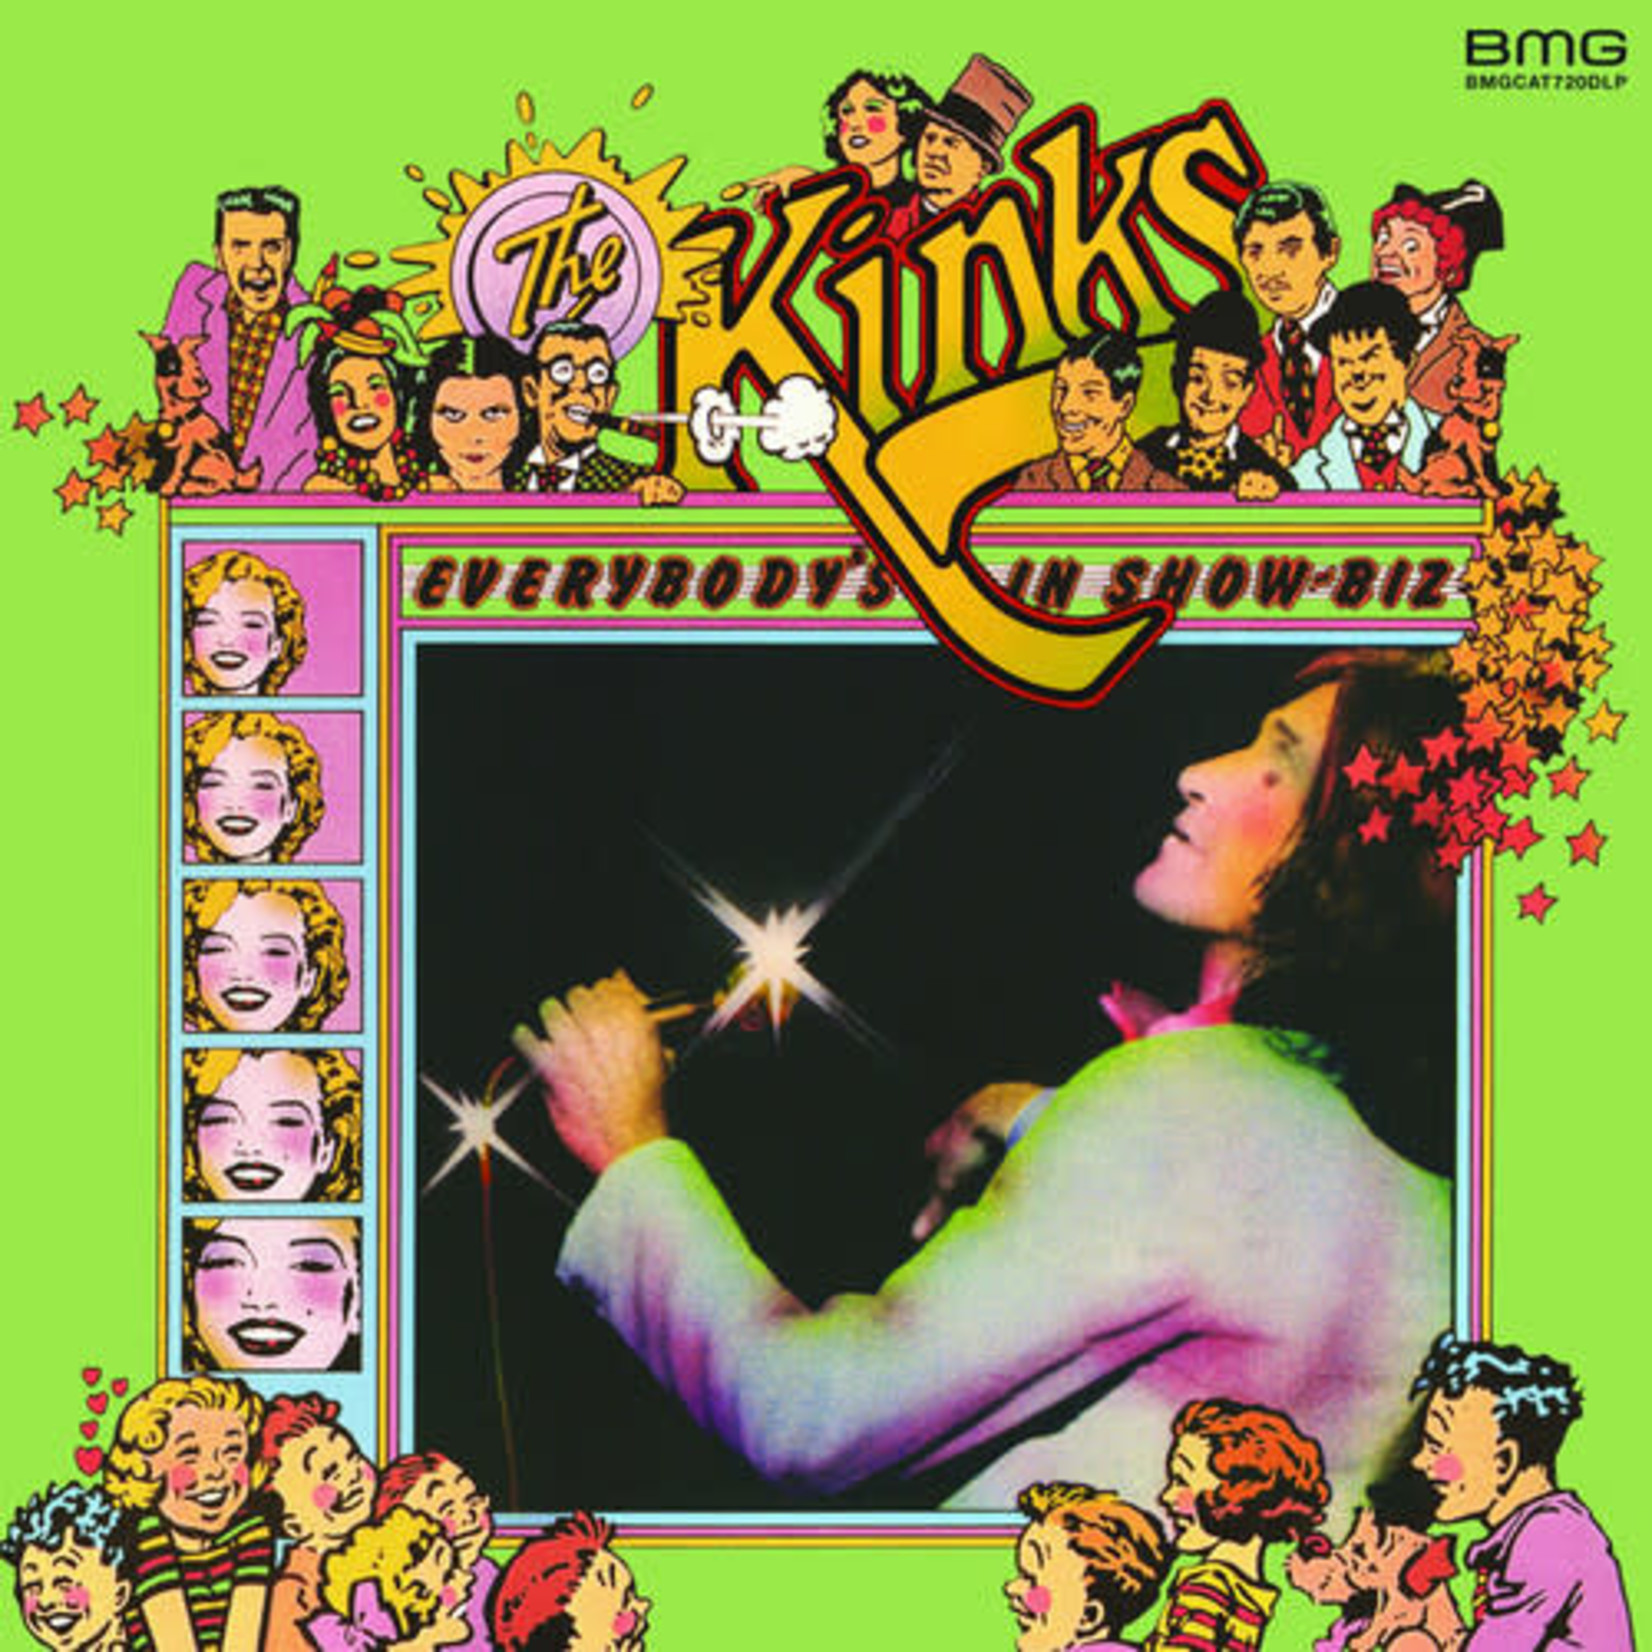 [New] Kinks - Everybody's in Show-Biz (2LP, 50th Anniversary, 2022 standalone remaster)